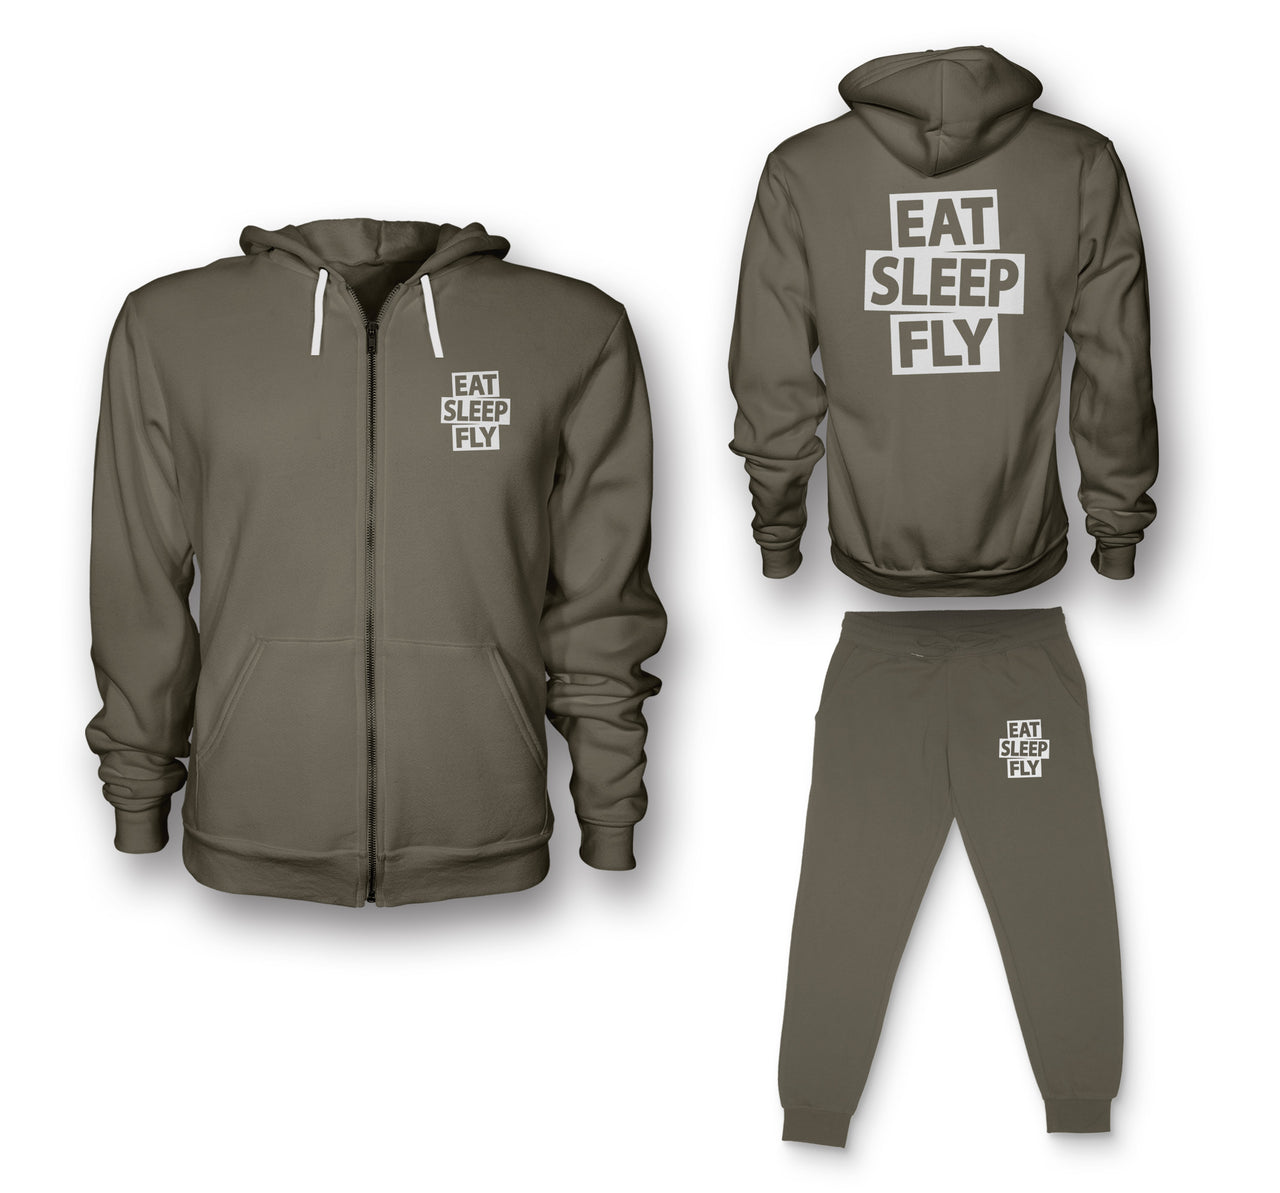 Eat Sleep Fly Designed Zipped Hoodies & Sweatpants Set